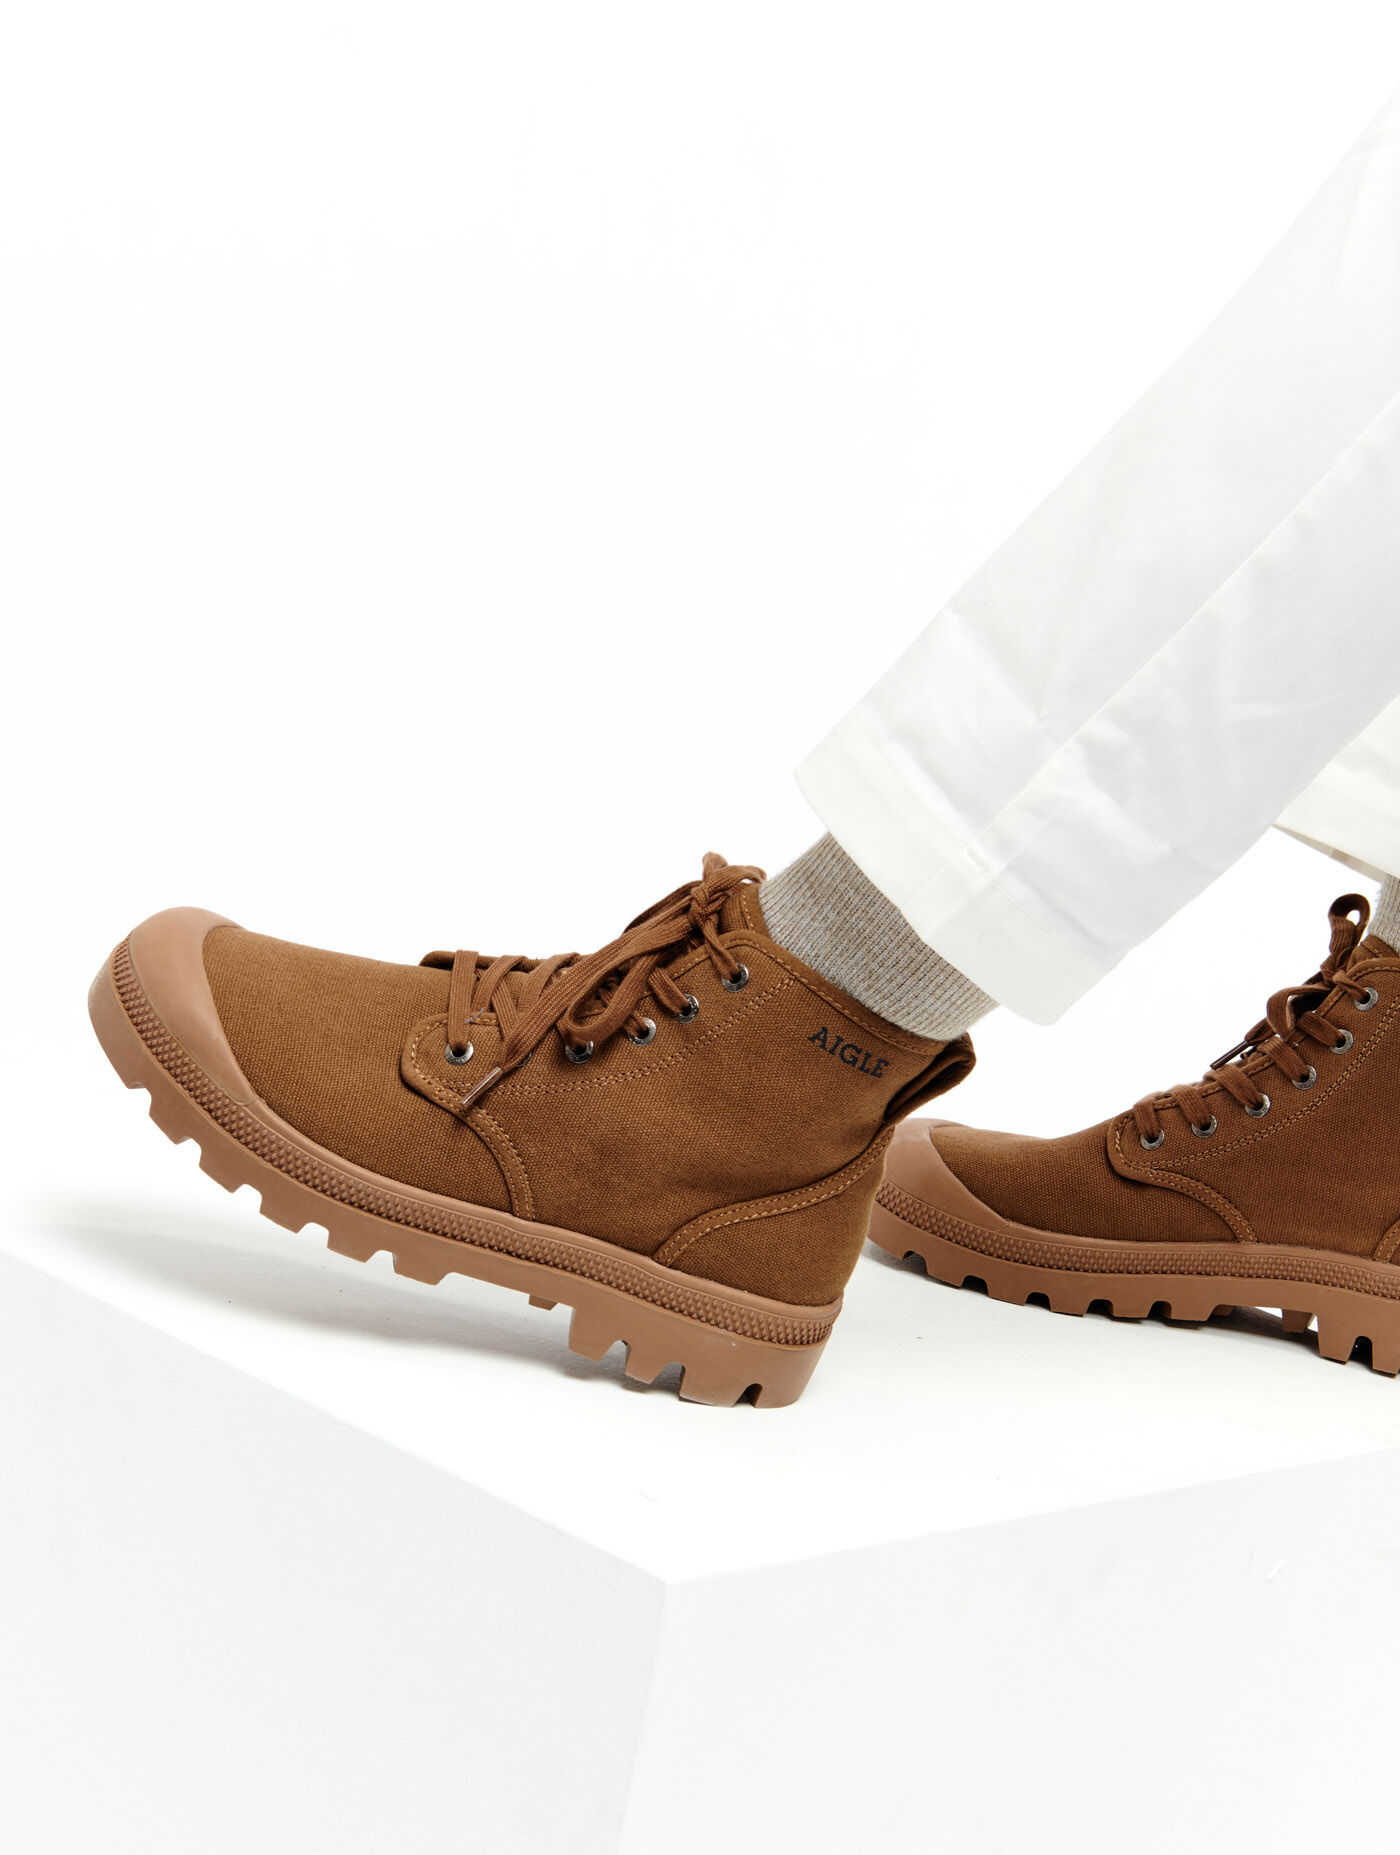 Aigle Terreid - Boots - Men's